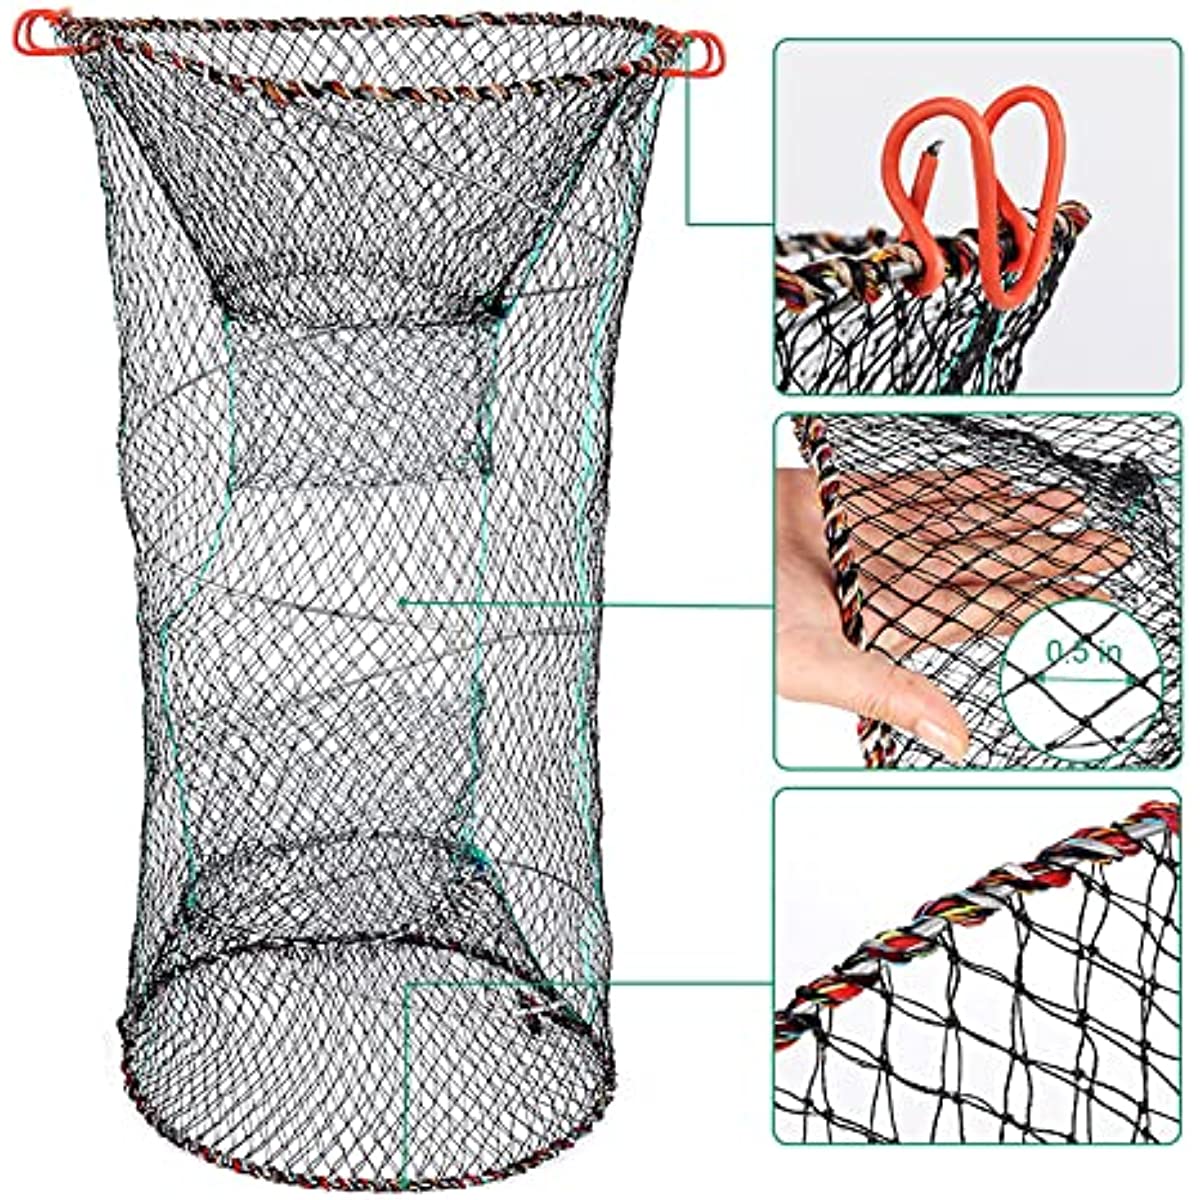 Fishing//fish box/ folding lobster cage/ crab fishing net/ lobster